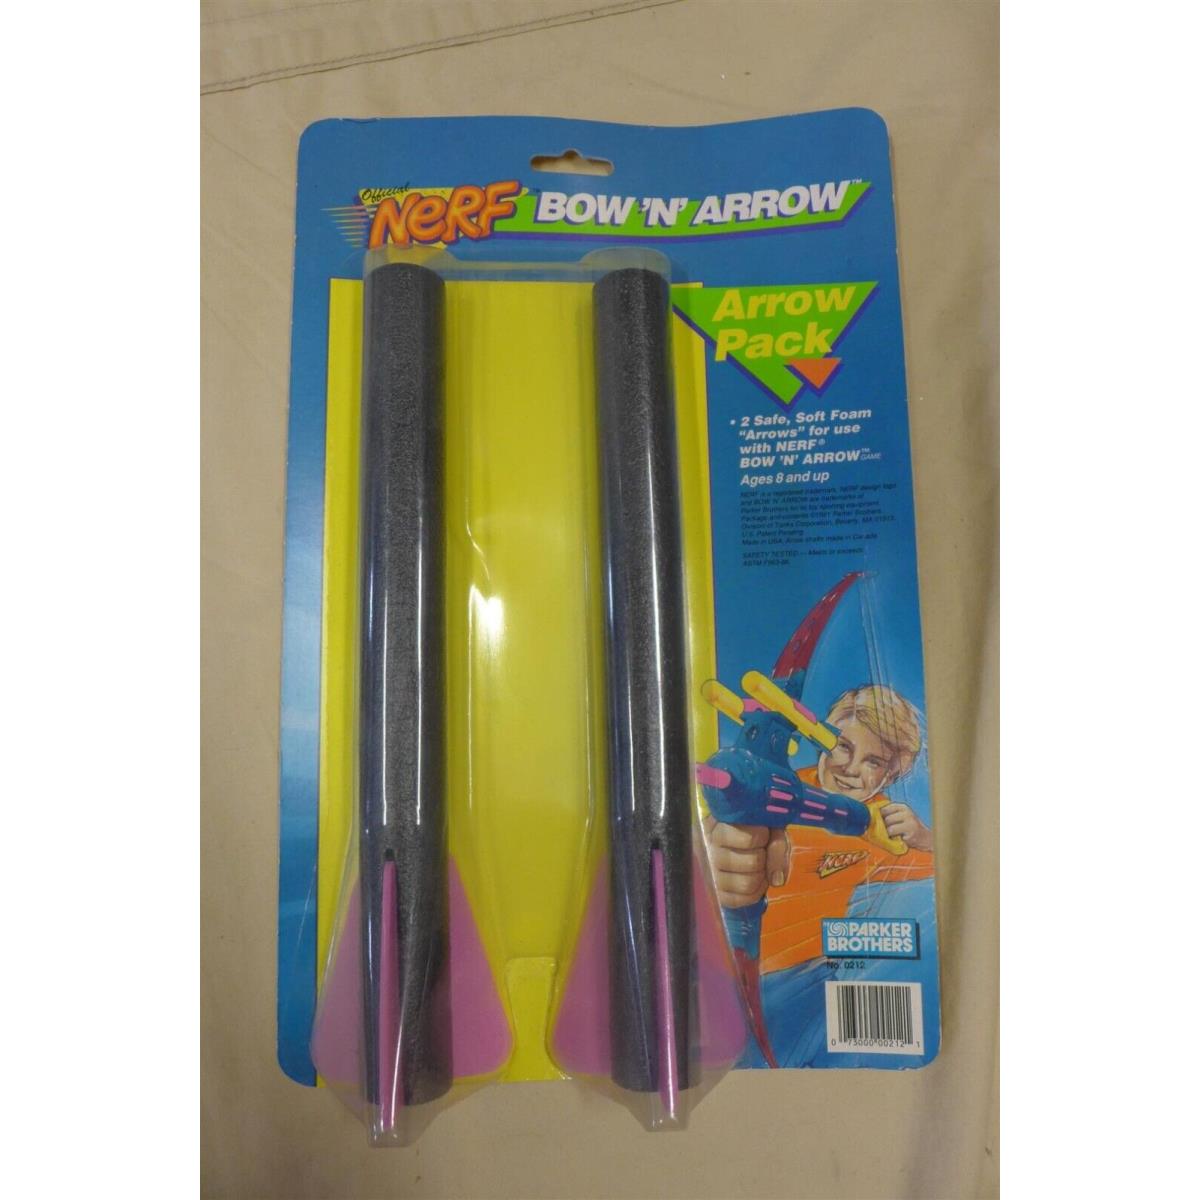 Vintage 1991 Nerf Bow `n` Arrow 2-Pack Arrow Set - New/sealed